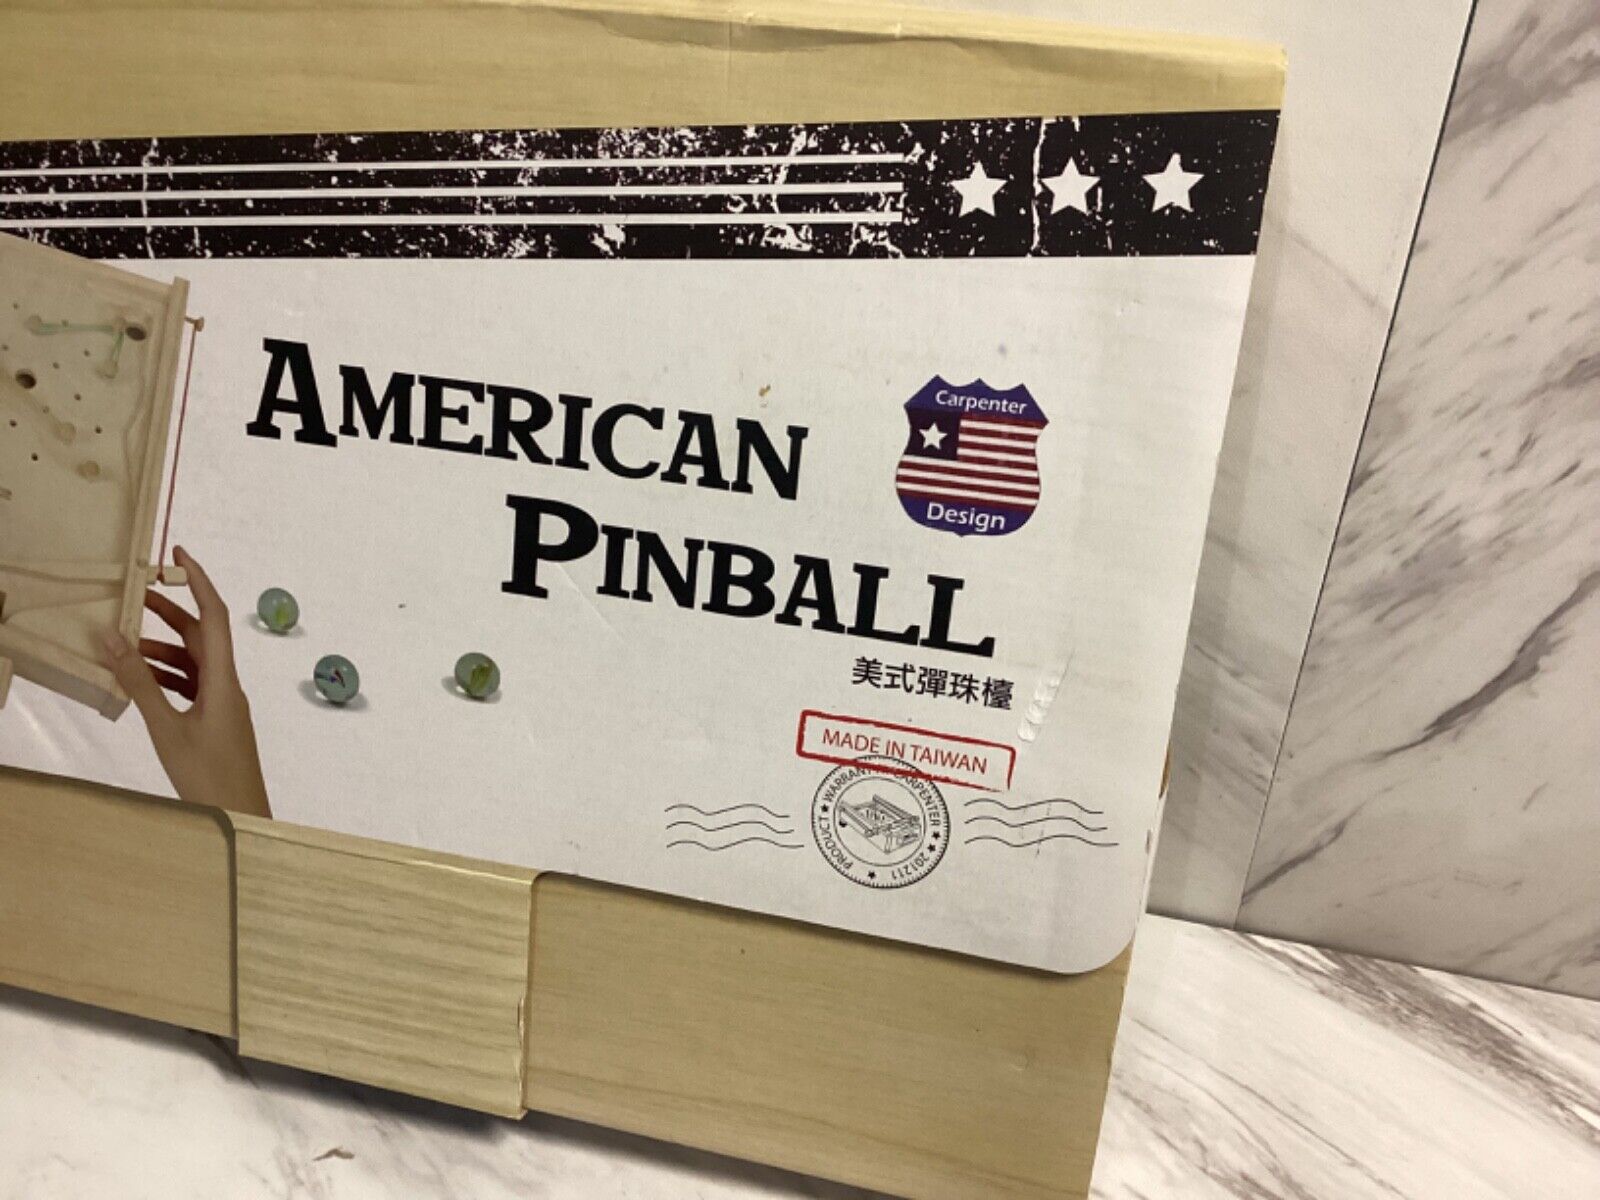 Carpenter design, American pinball made in Taiwan Без бренда - фотография #3